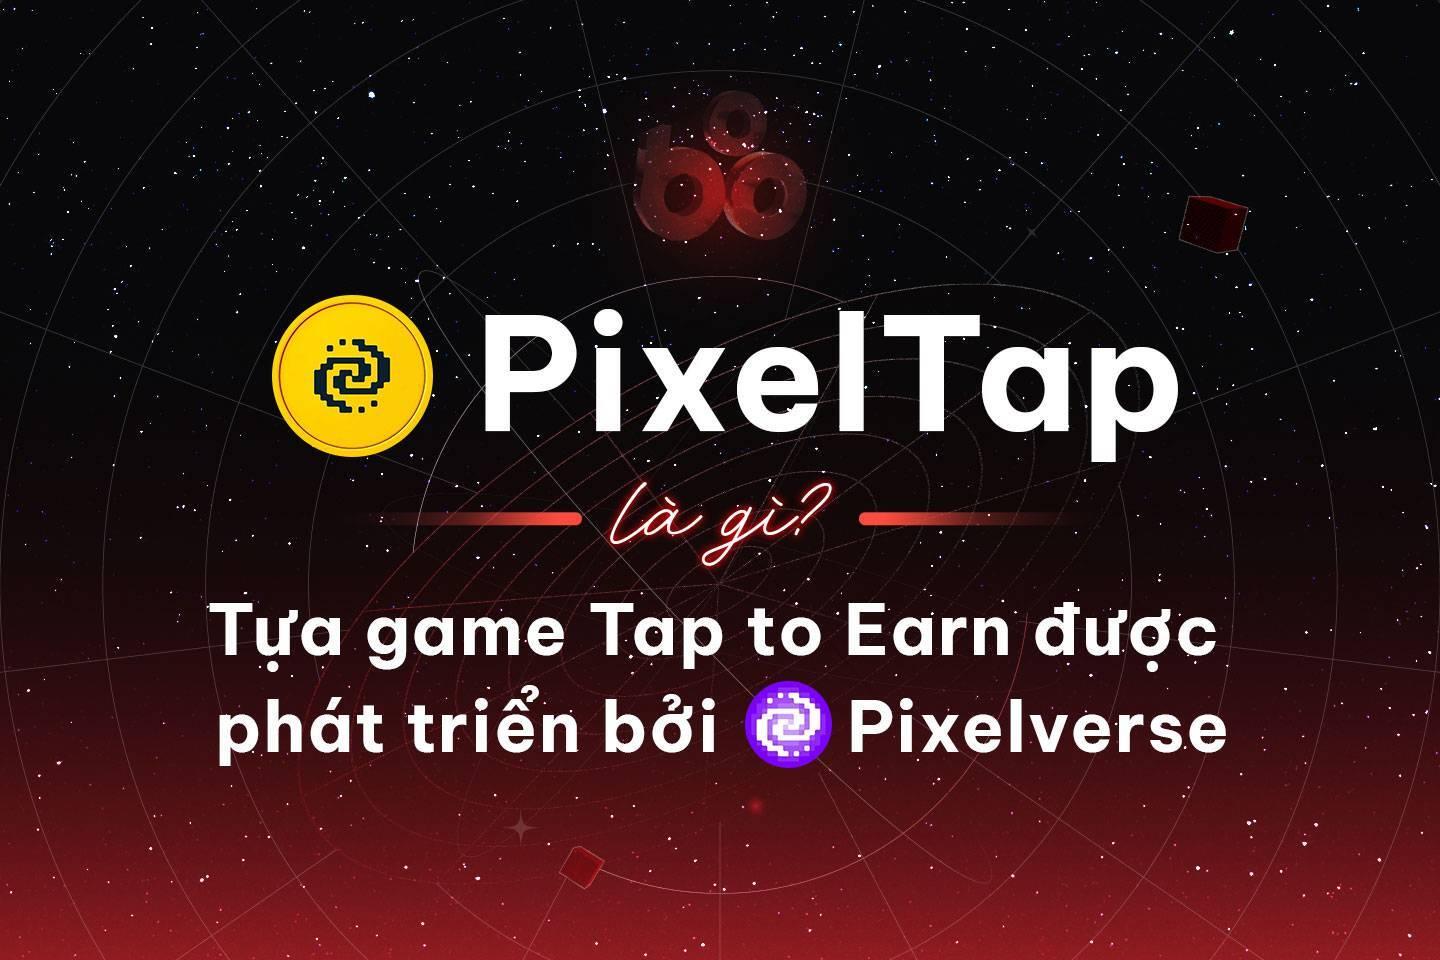 pixeltap-la-gi-tua-game-tap-to-earn-duoc-phat-trien-boi-pixelverse